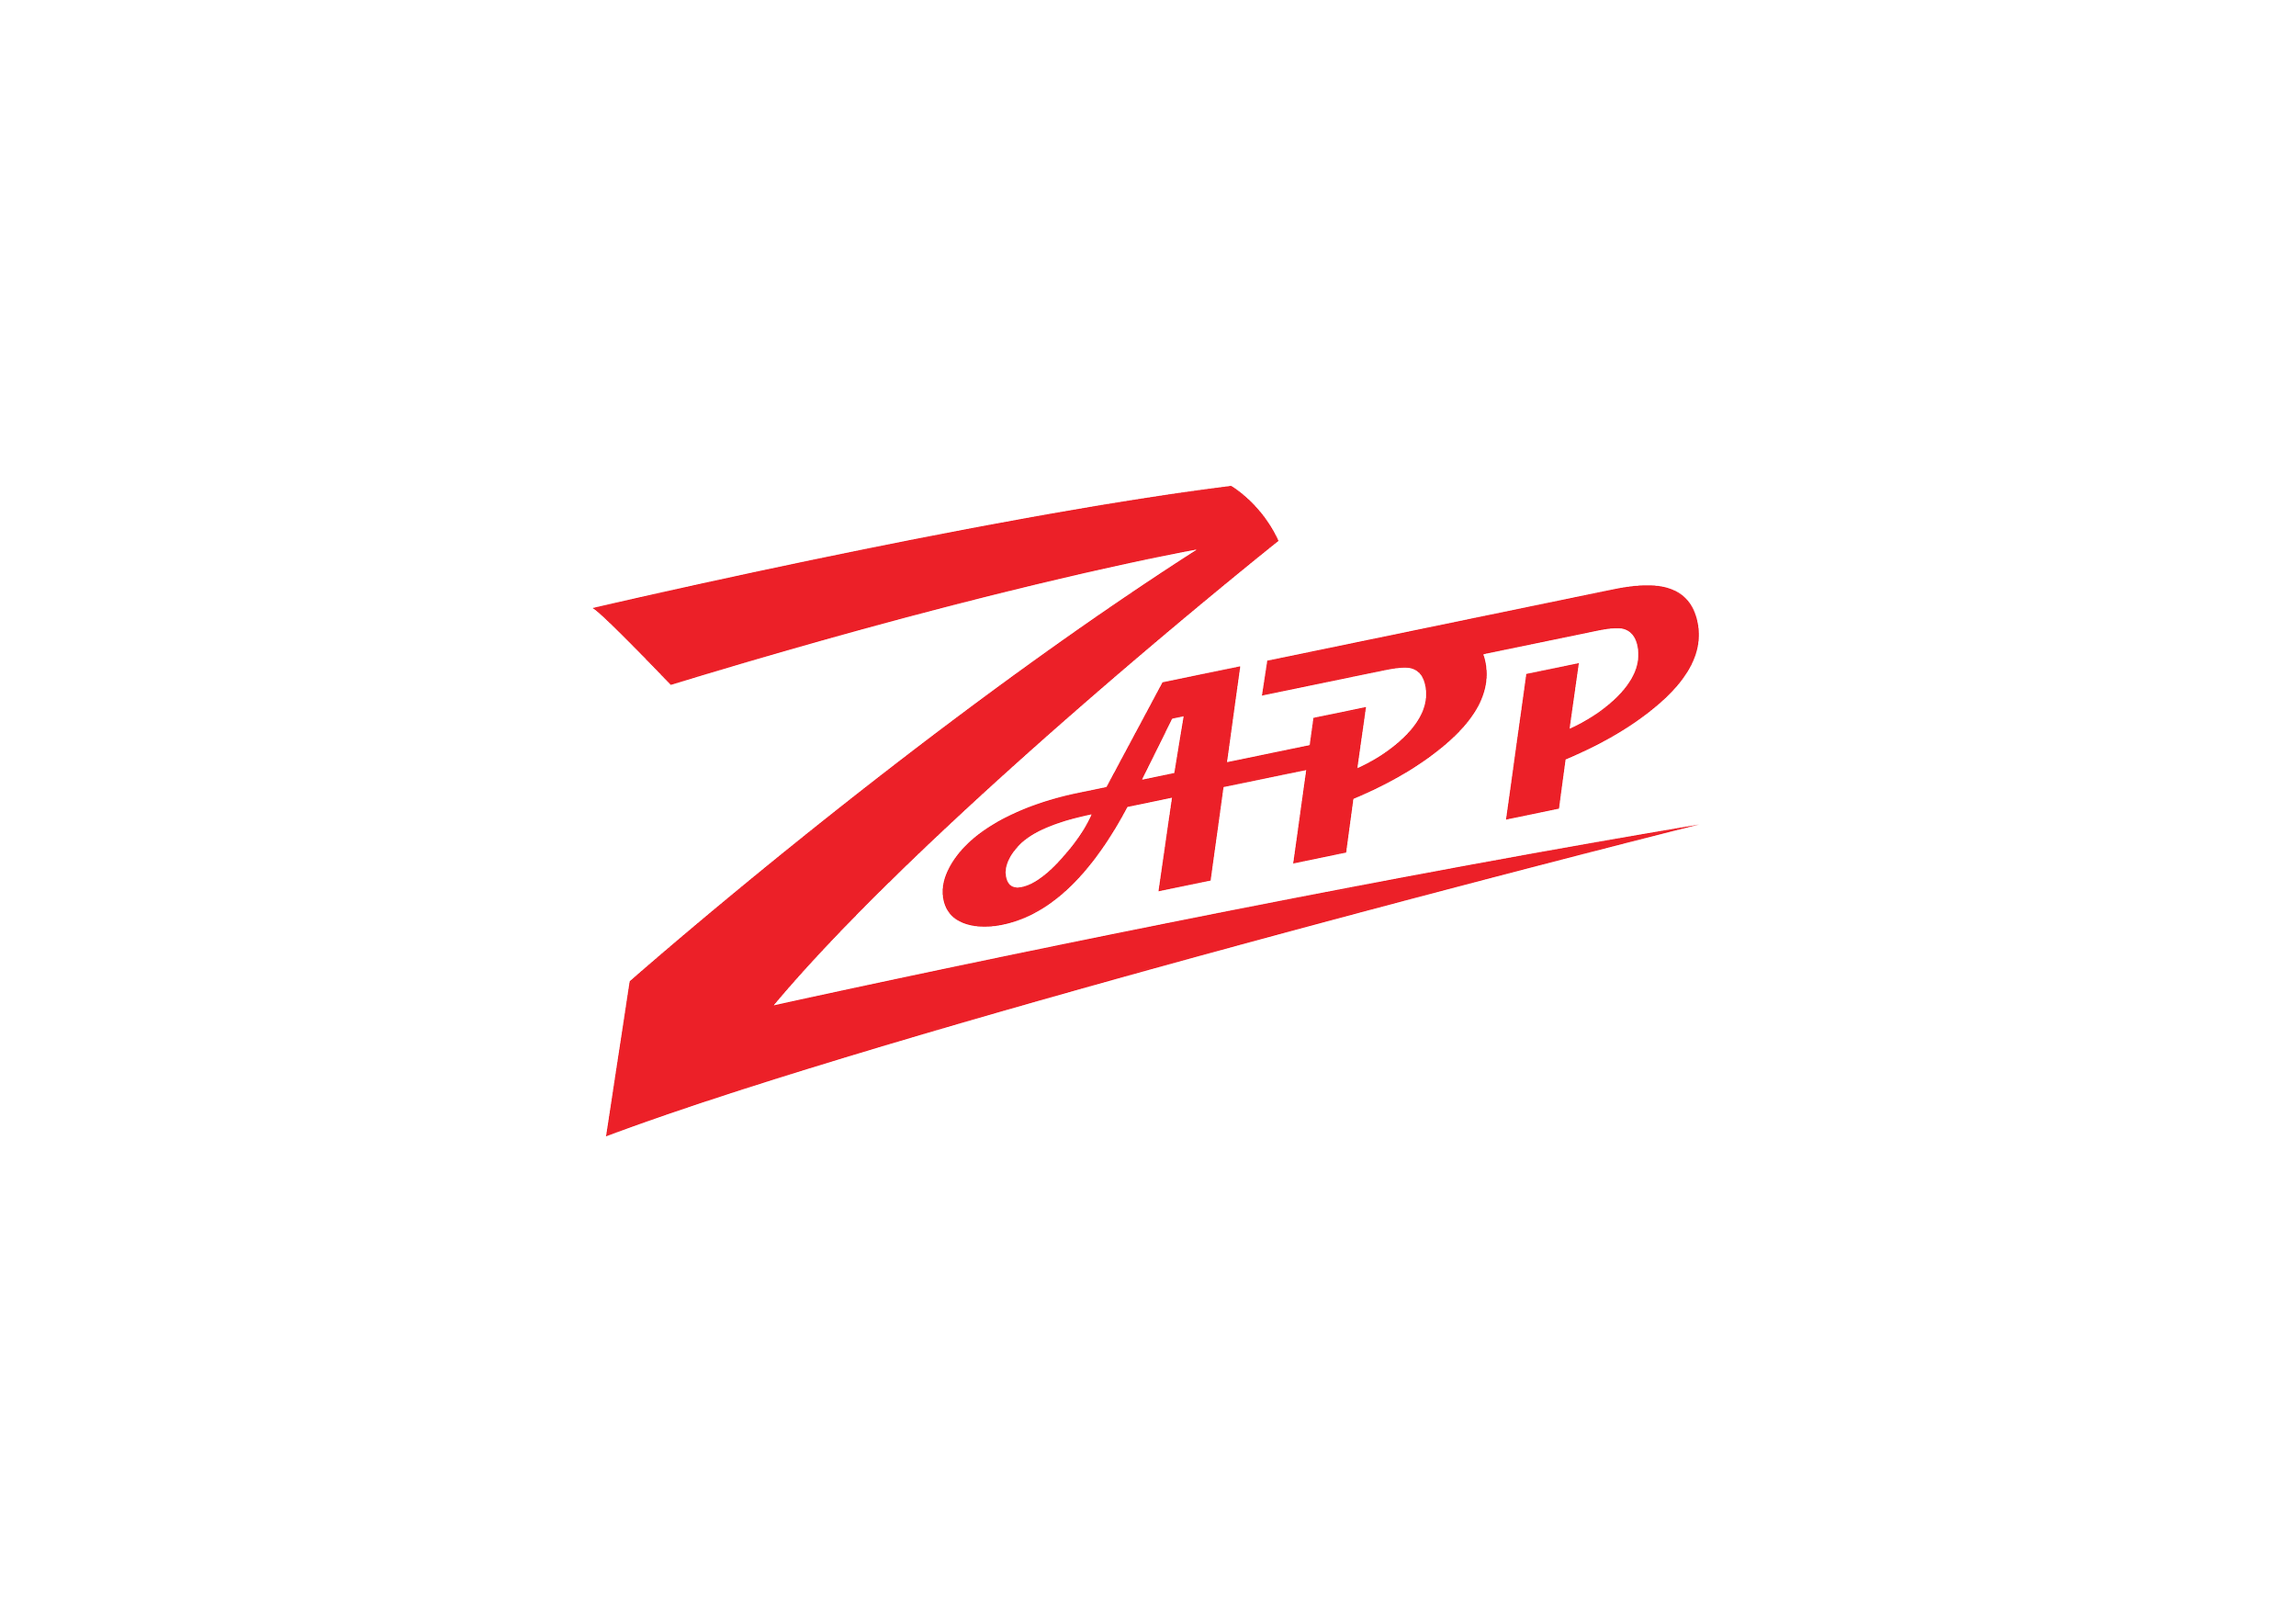 Zapp_logo.png